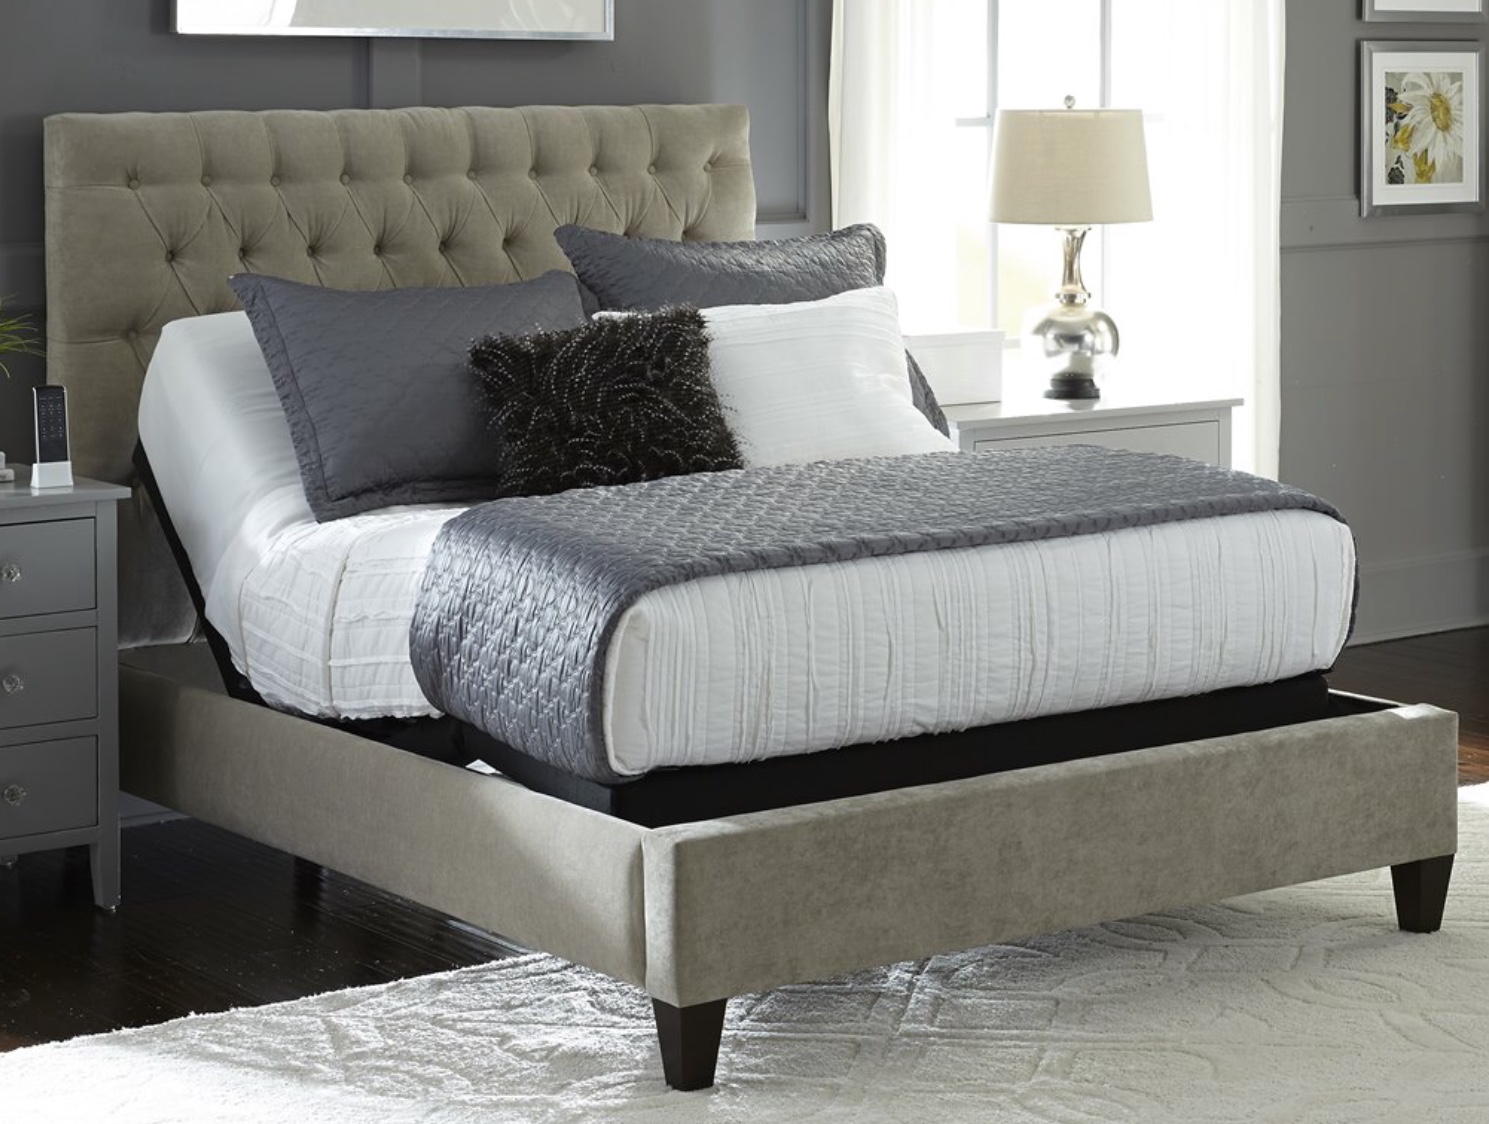 Adjustable Bed Fit Inside Any Frame, Does An Adjustable Base Need A Bed Frame